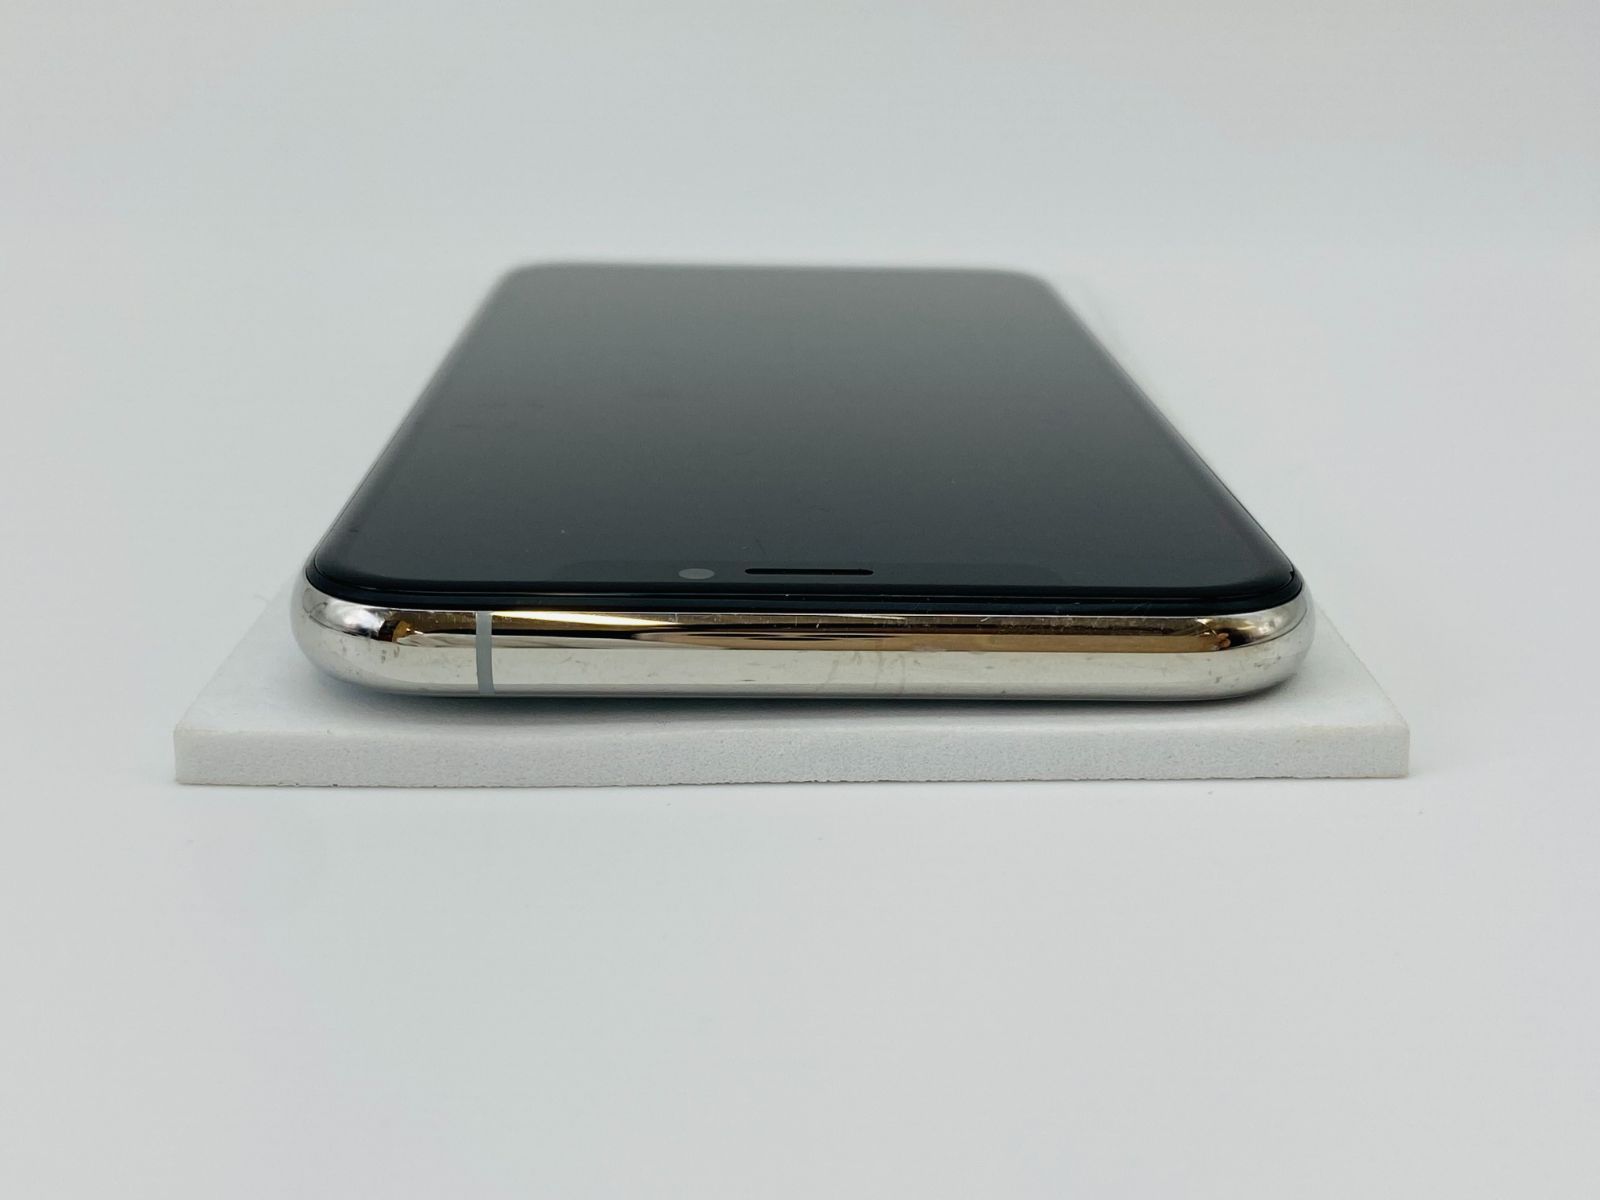 iPhoneXS 64GB シルバー/大容量新品BT100%/シムフリー 004-